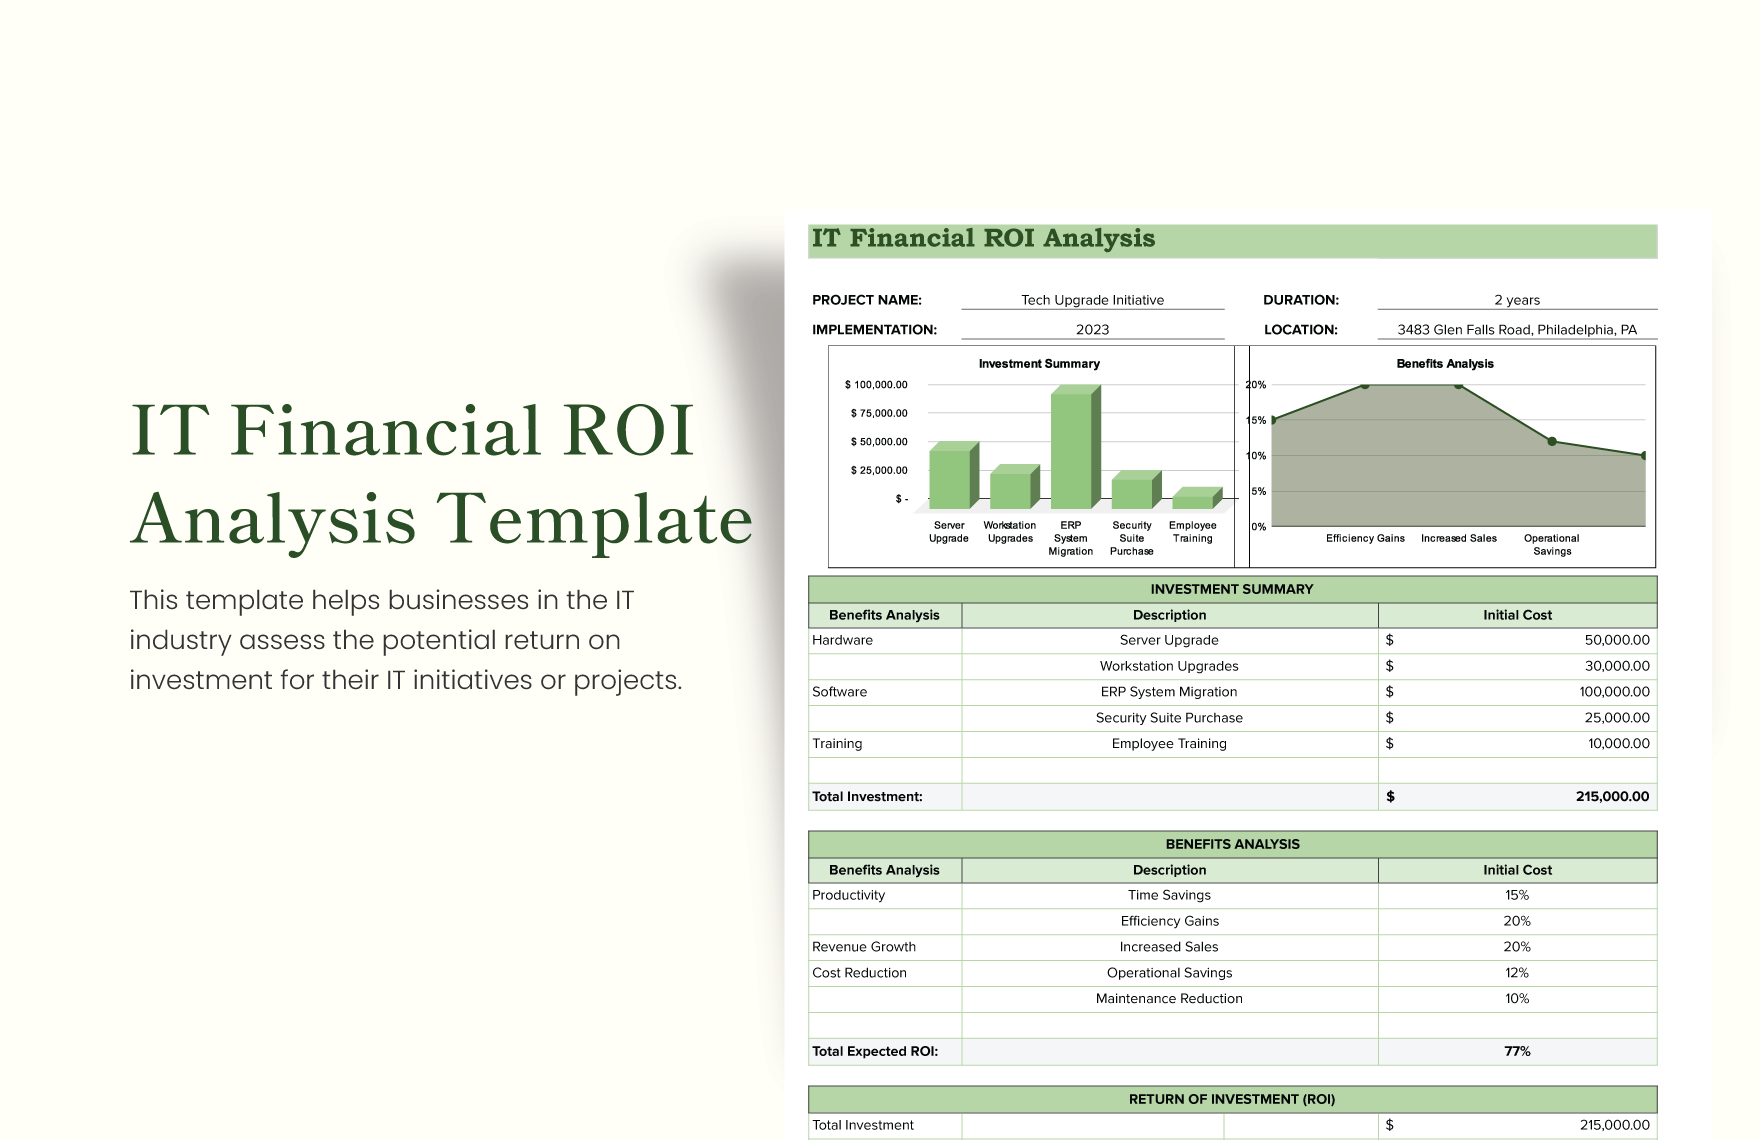 IT Financial ROI Analysis Template